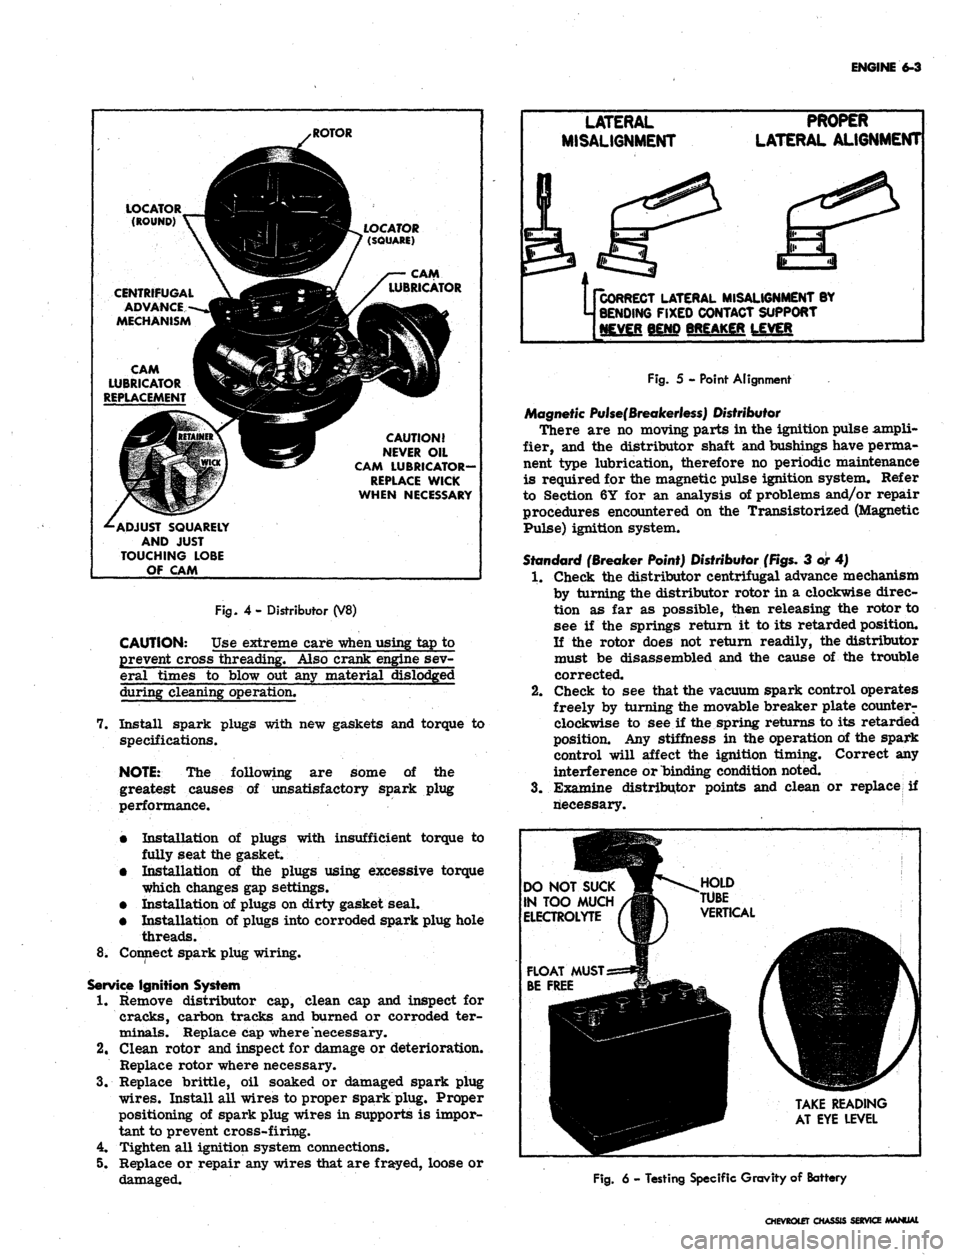 CHEVROLET CAMARO 1967 1.G Chassis Workshop Manual 
ENGINE
 6-3

(ROUND) Y~~fll^H

CENTRIFUGAL
 A ^k

ADVANCE--jflgKpl

MECHANISM
 UB|

CAM
 KSK^2

LUBRICATOR
 VlSMi

REPLACEMENT
 ^BK

-^ADJUST
 SQUARELY

AND
 JUST

TOUCHING
 LOBE

OF
 CAM 
/ROTOR

HB